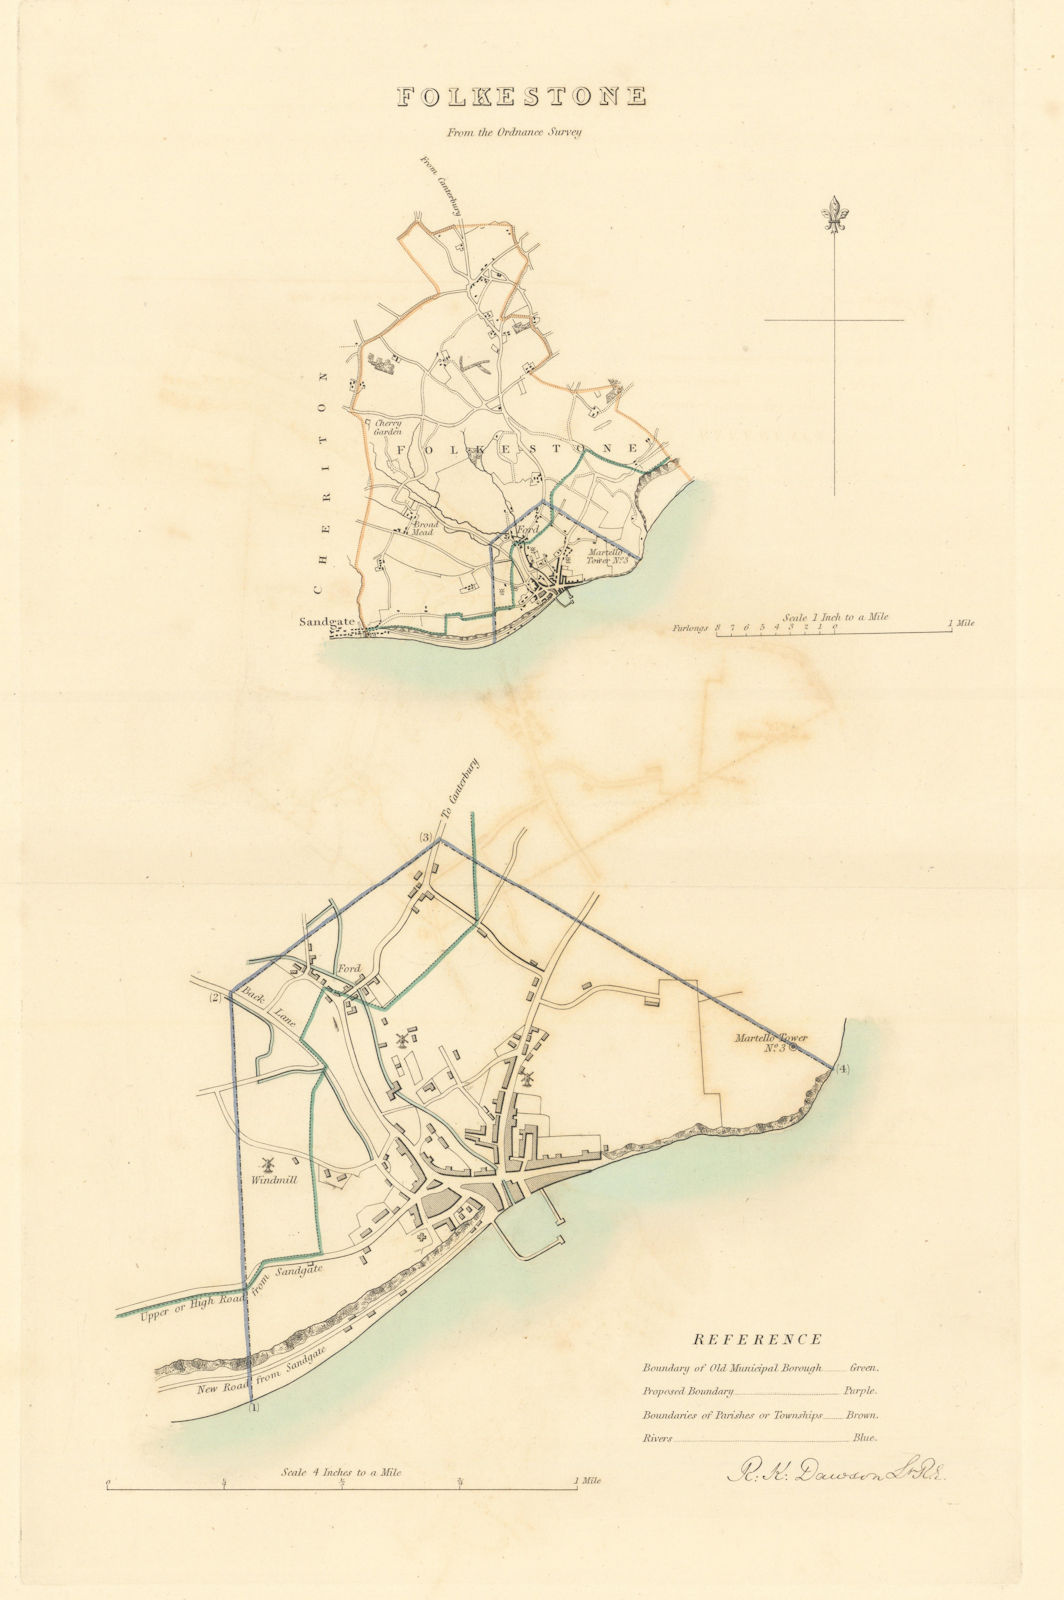 FOLKESTONE borough/town/city plan. BOUNDARY COMMISSION. Kent. DAWSON 1837 map